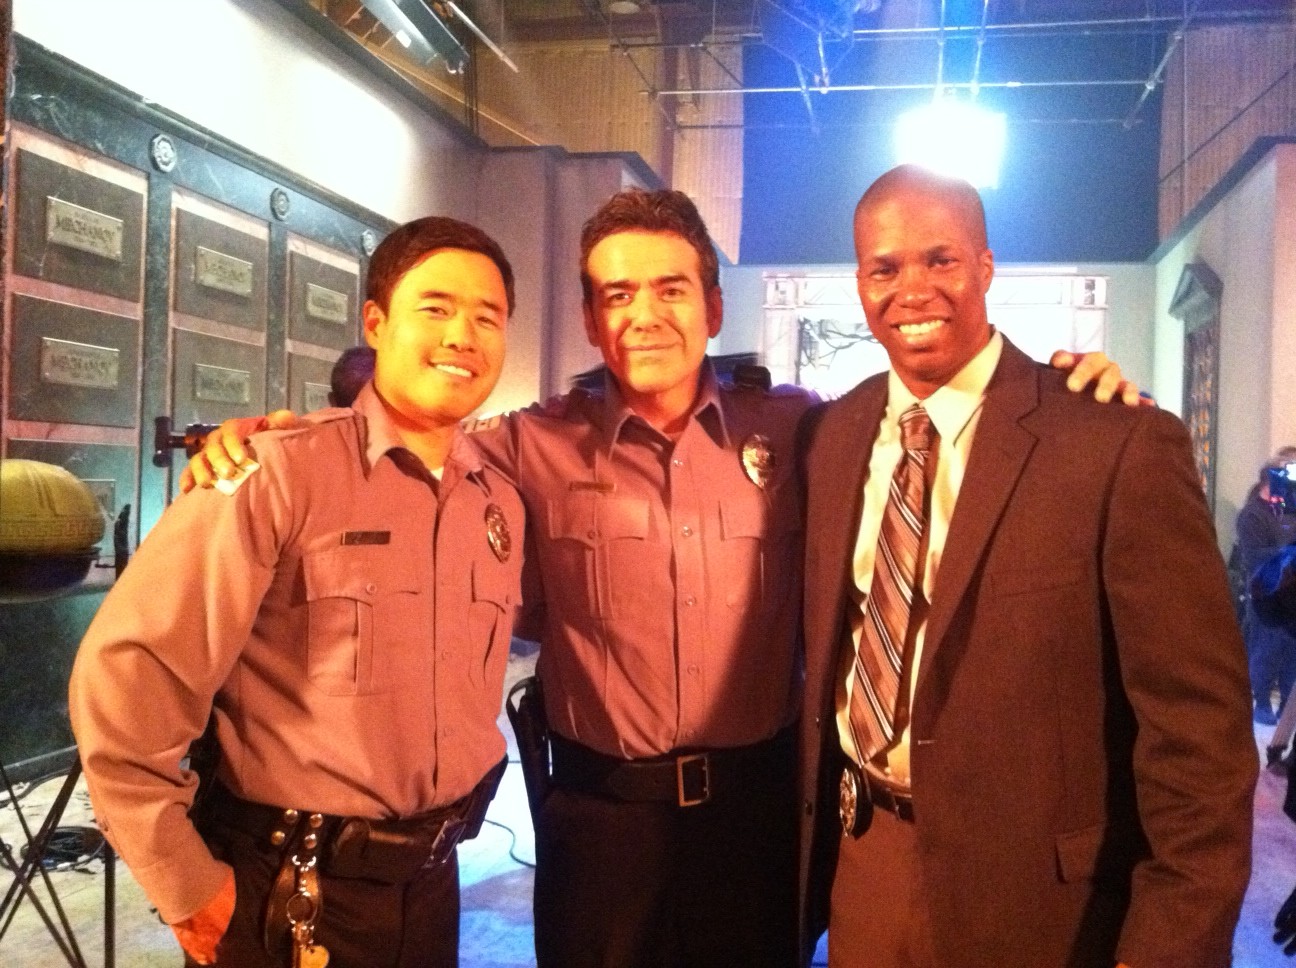 Randall Park, Jose Yenque, Roger Bridges (Detective Briggs) - On the set of SUPAH NINJAS.